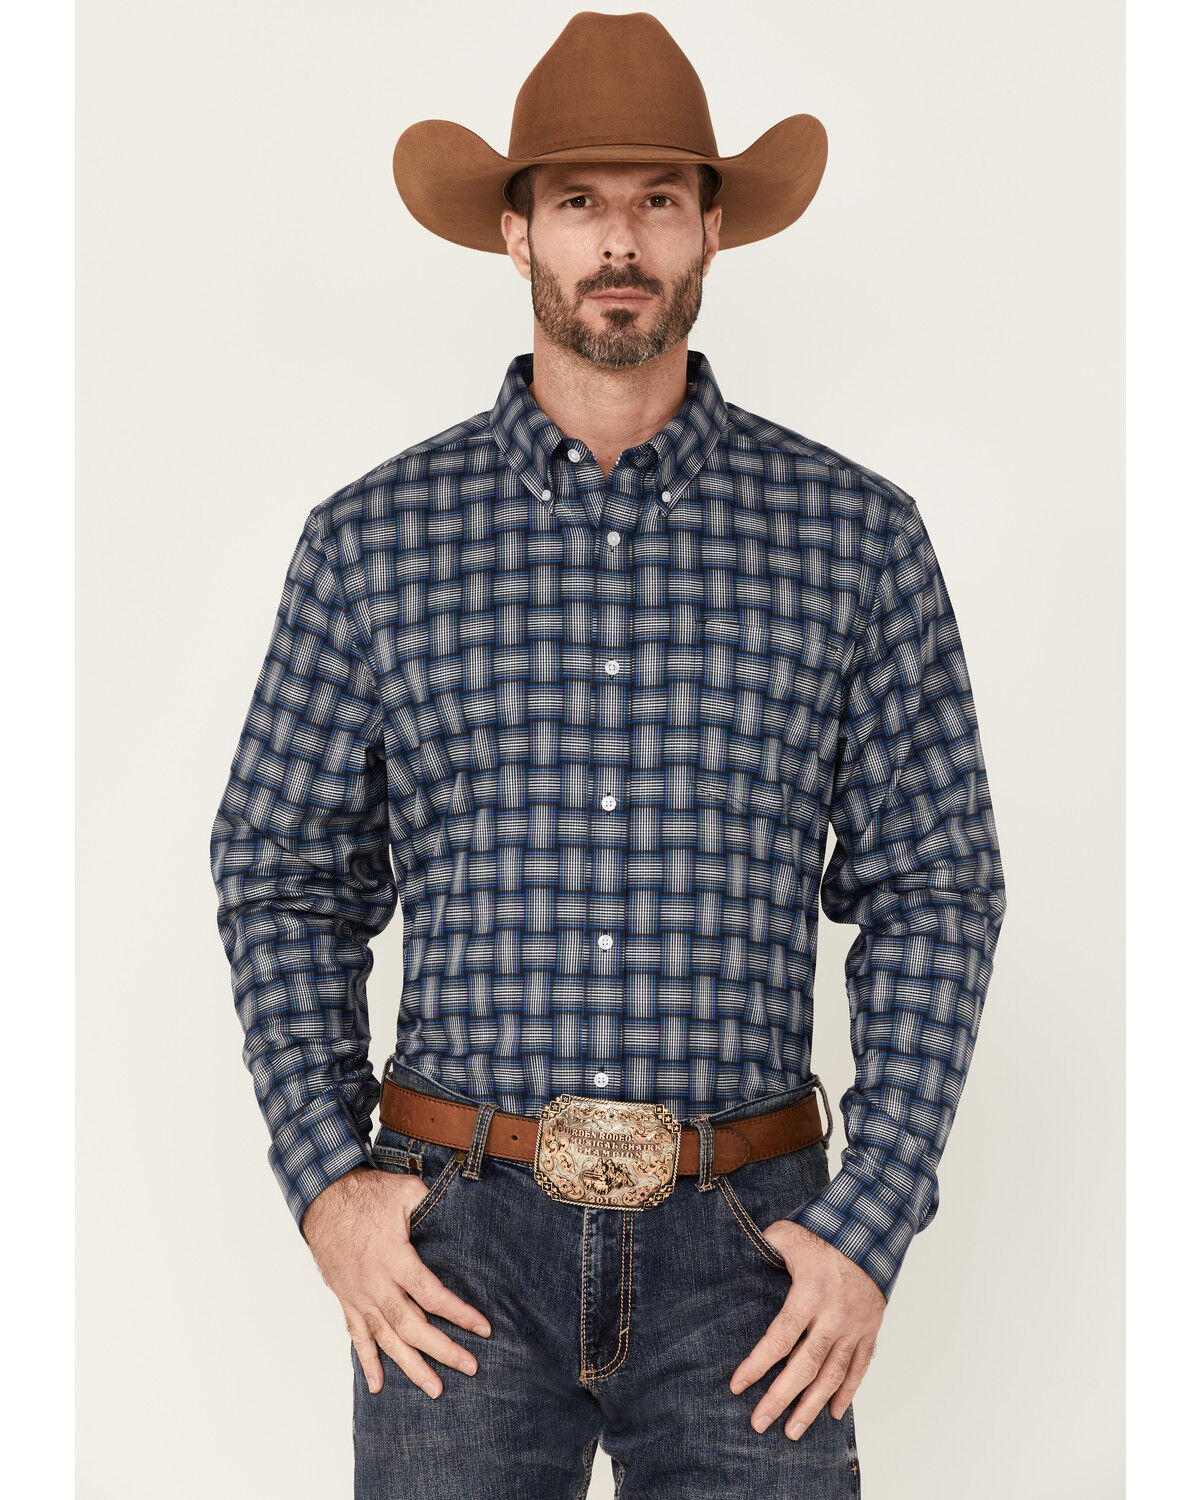 Ccsu19w7-Big Cody James Mens Core Picnic Plaid Long Sleeve Western Shirt Big